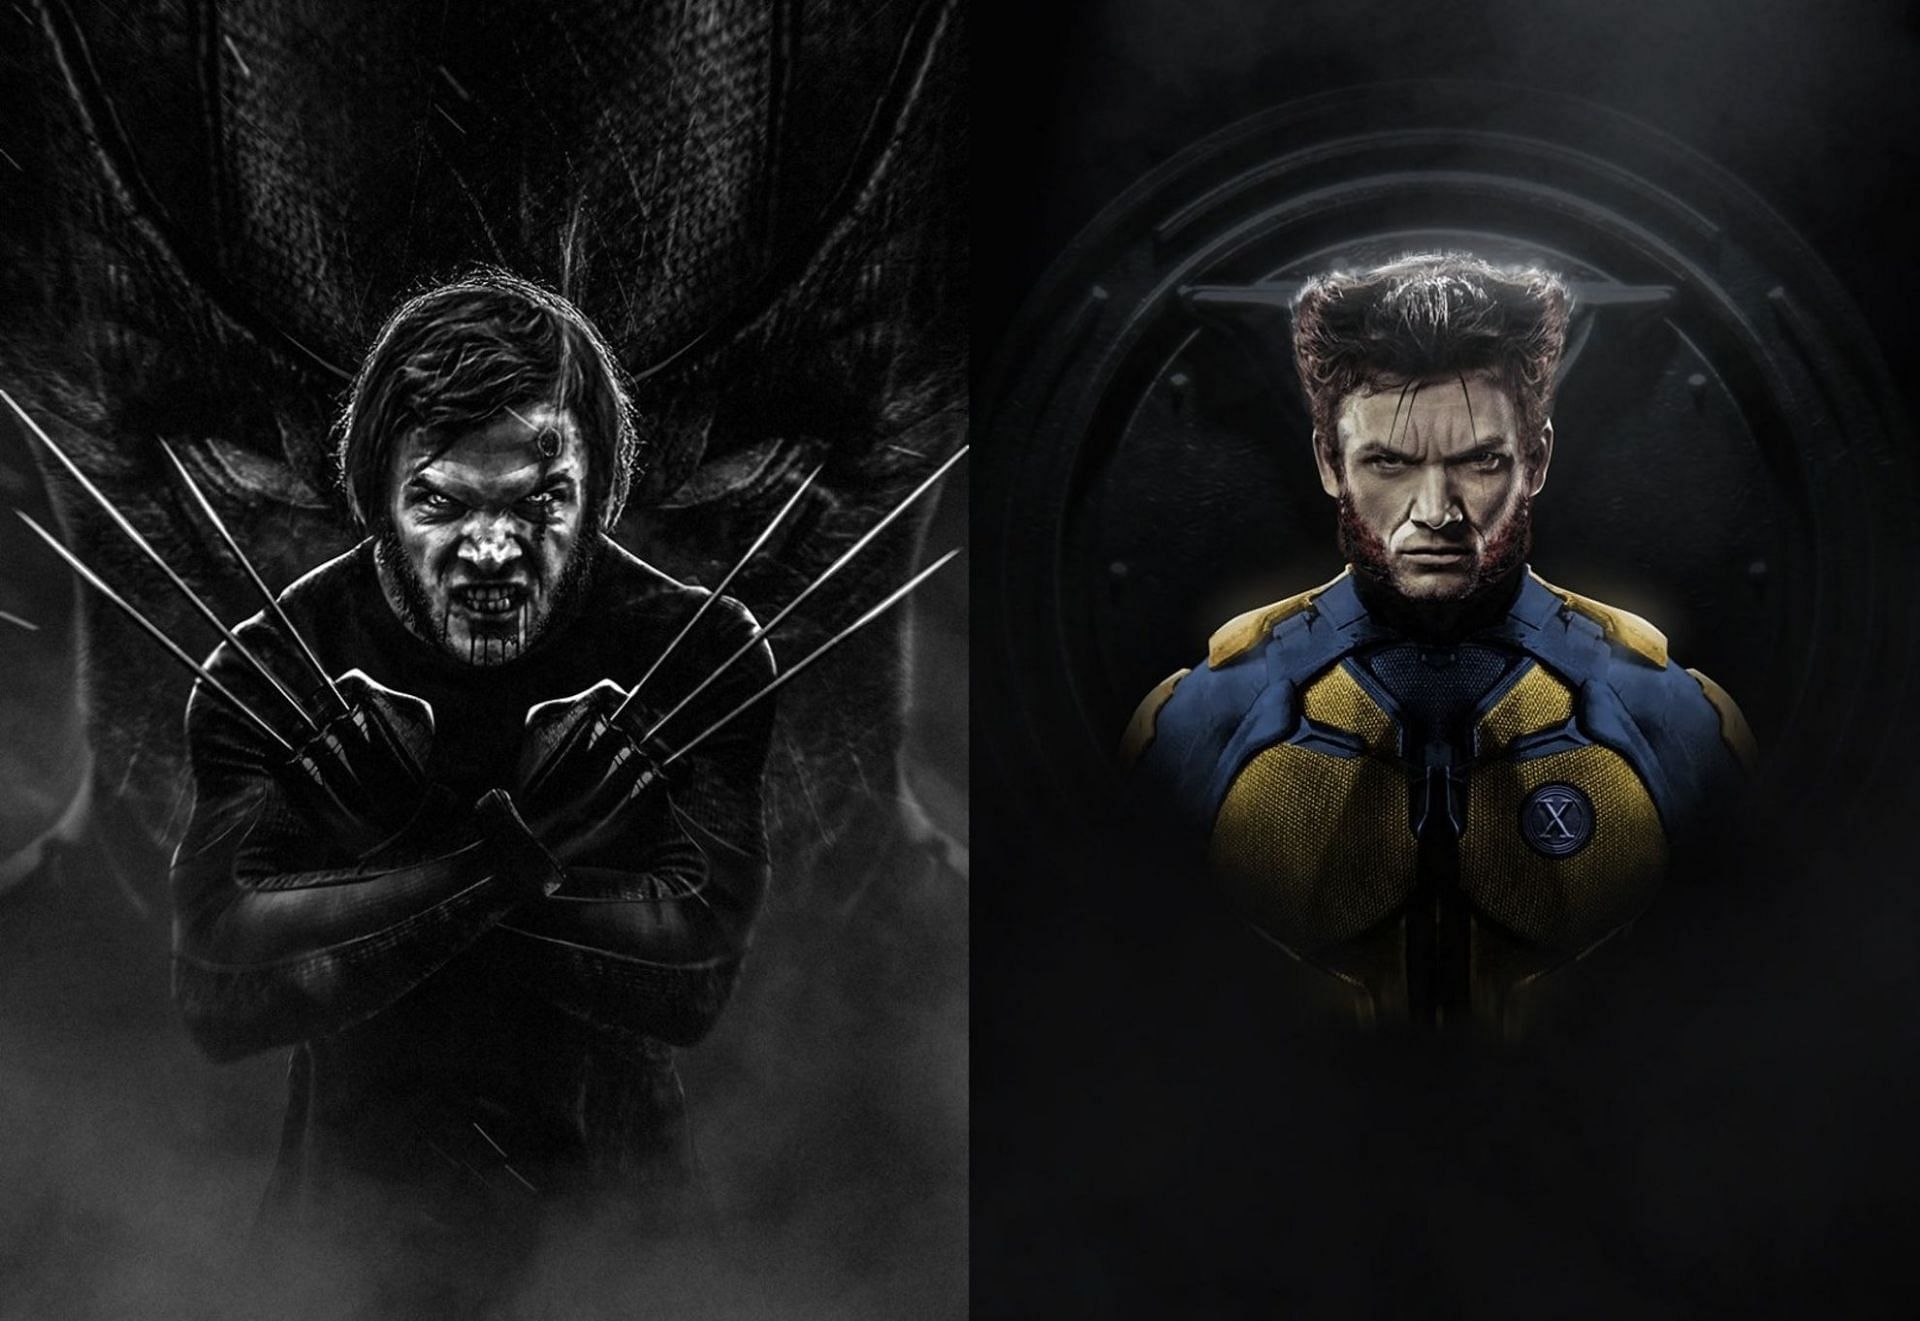 Taron Egerton as Wolverine fanart (Image via BossLogic/Twitter)